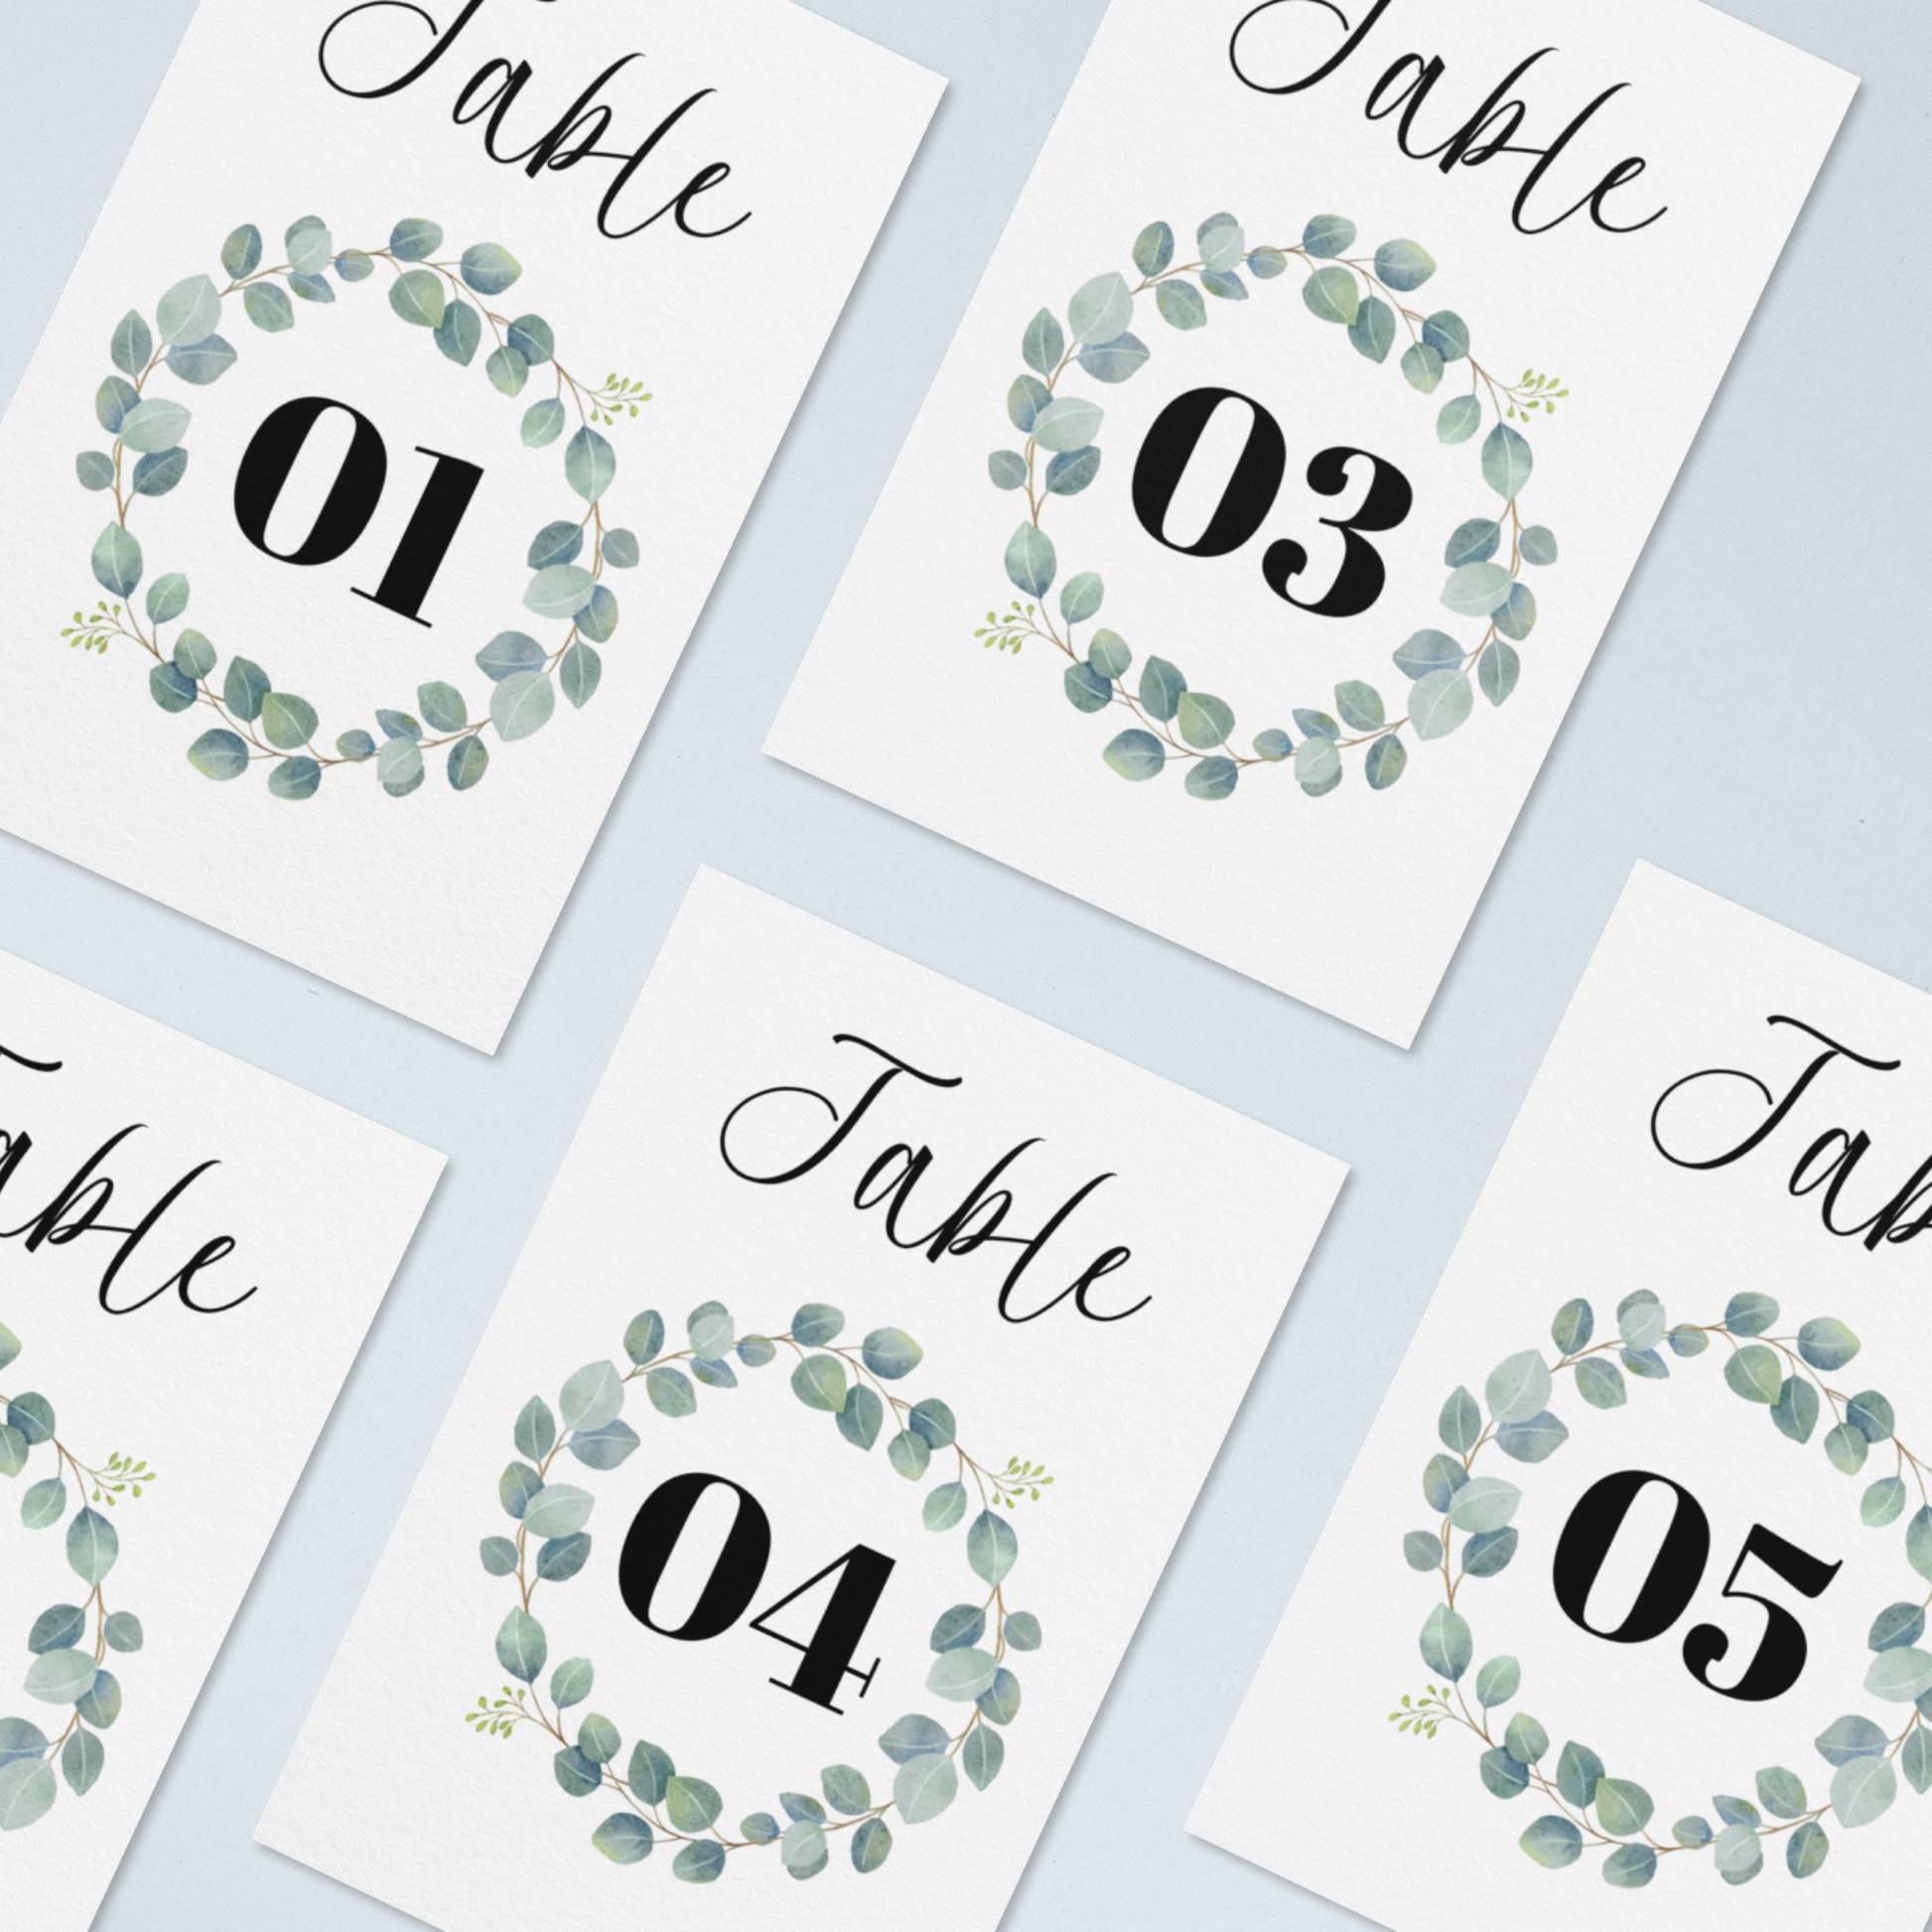 Wedding Table Numbers Printable - Table 1-25